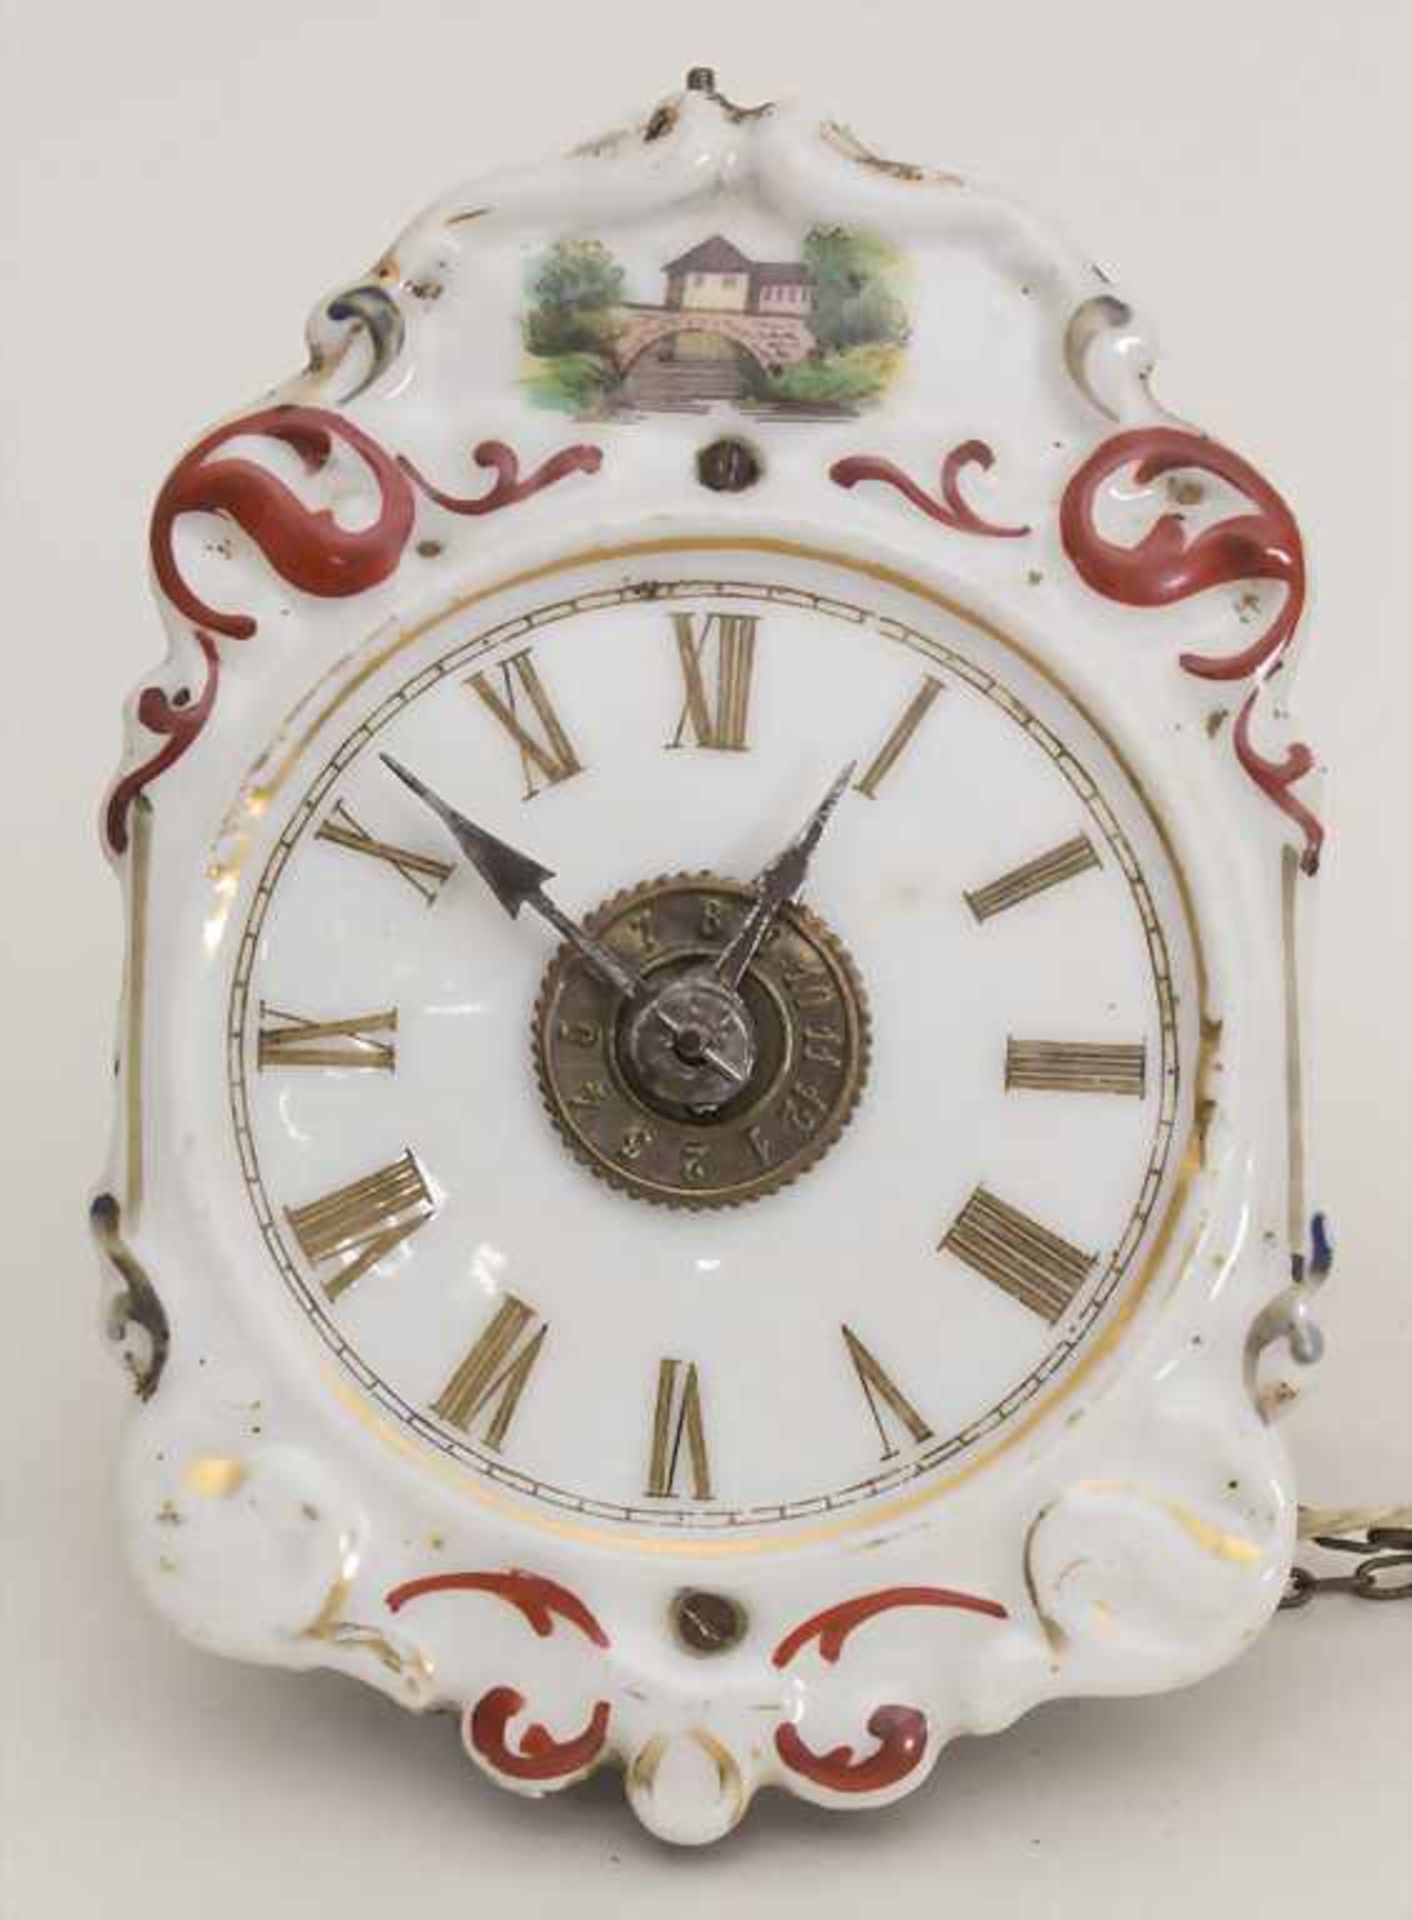 Jockele, A Black Forest Clock, P. Weisser, deutsch, um 1860Zifferblatt: Porzellan bemalt,Werk: